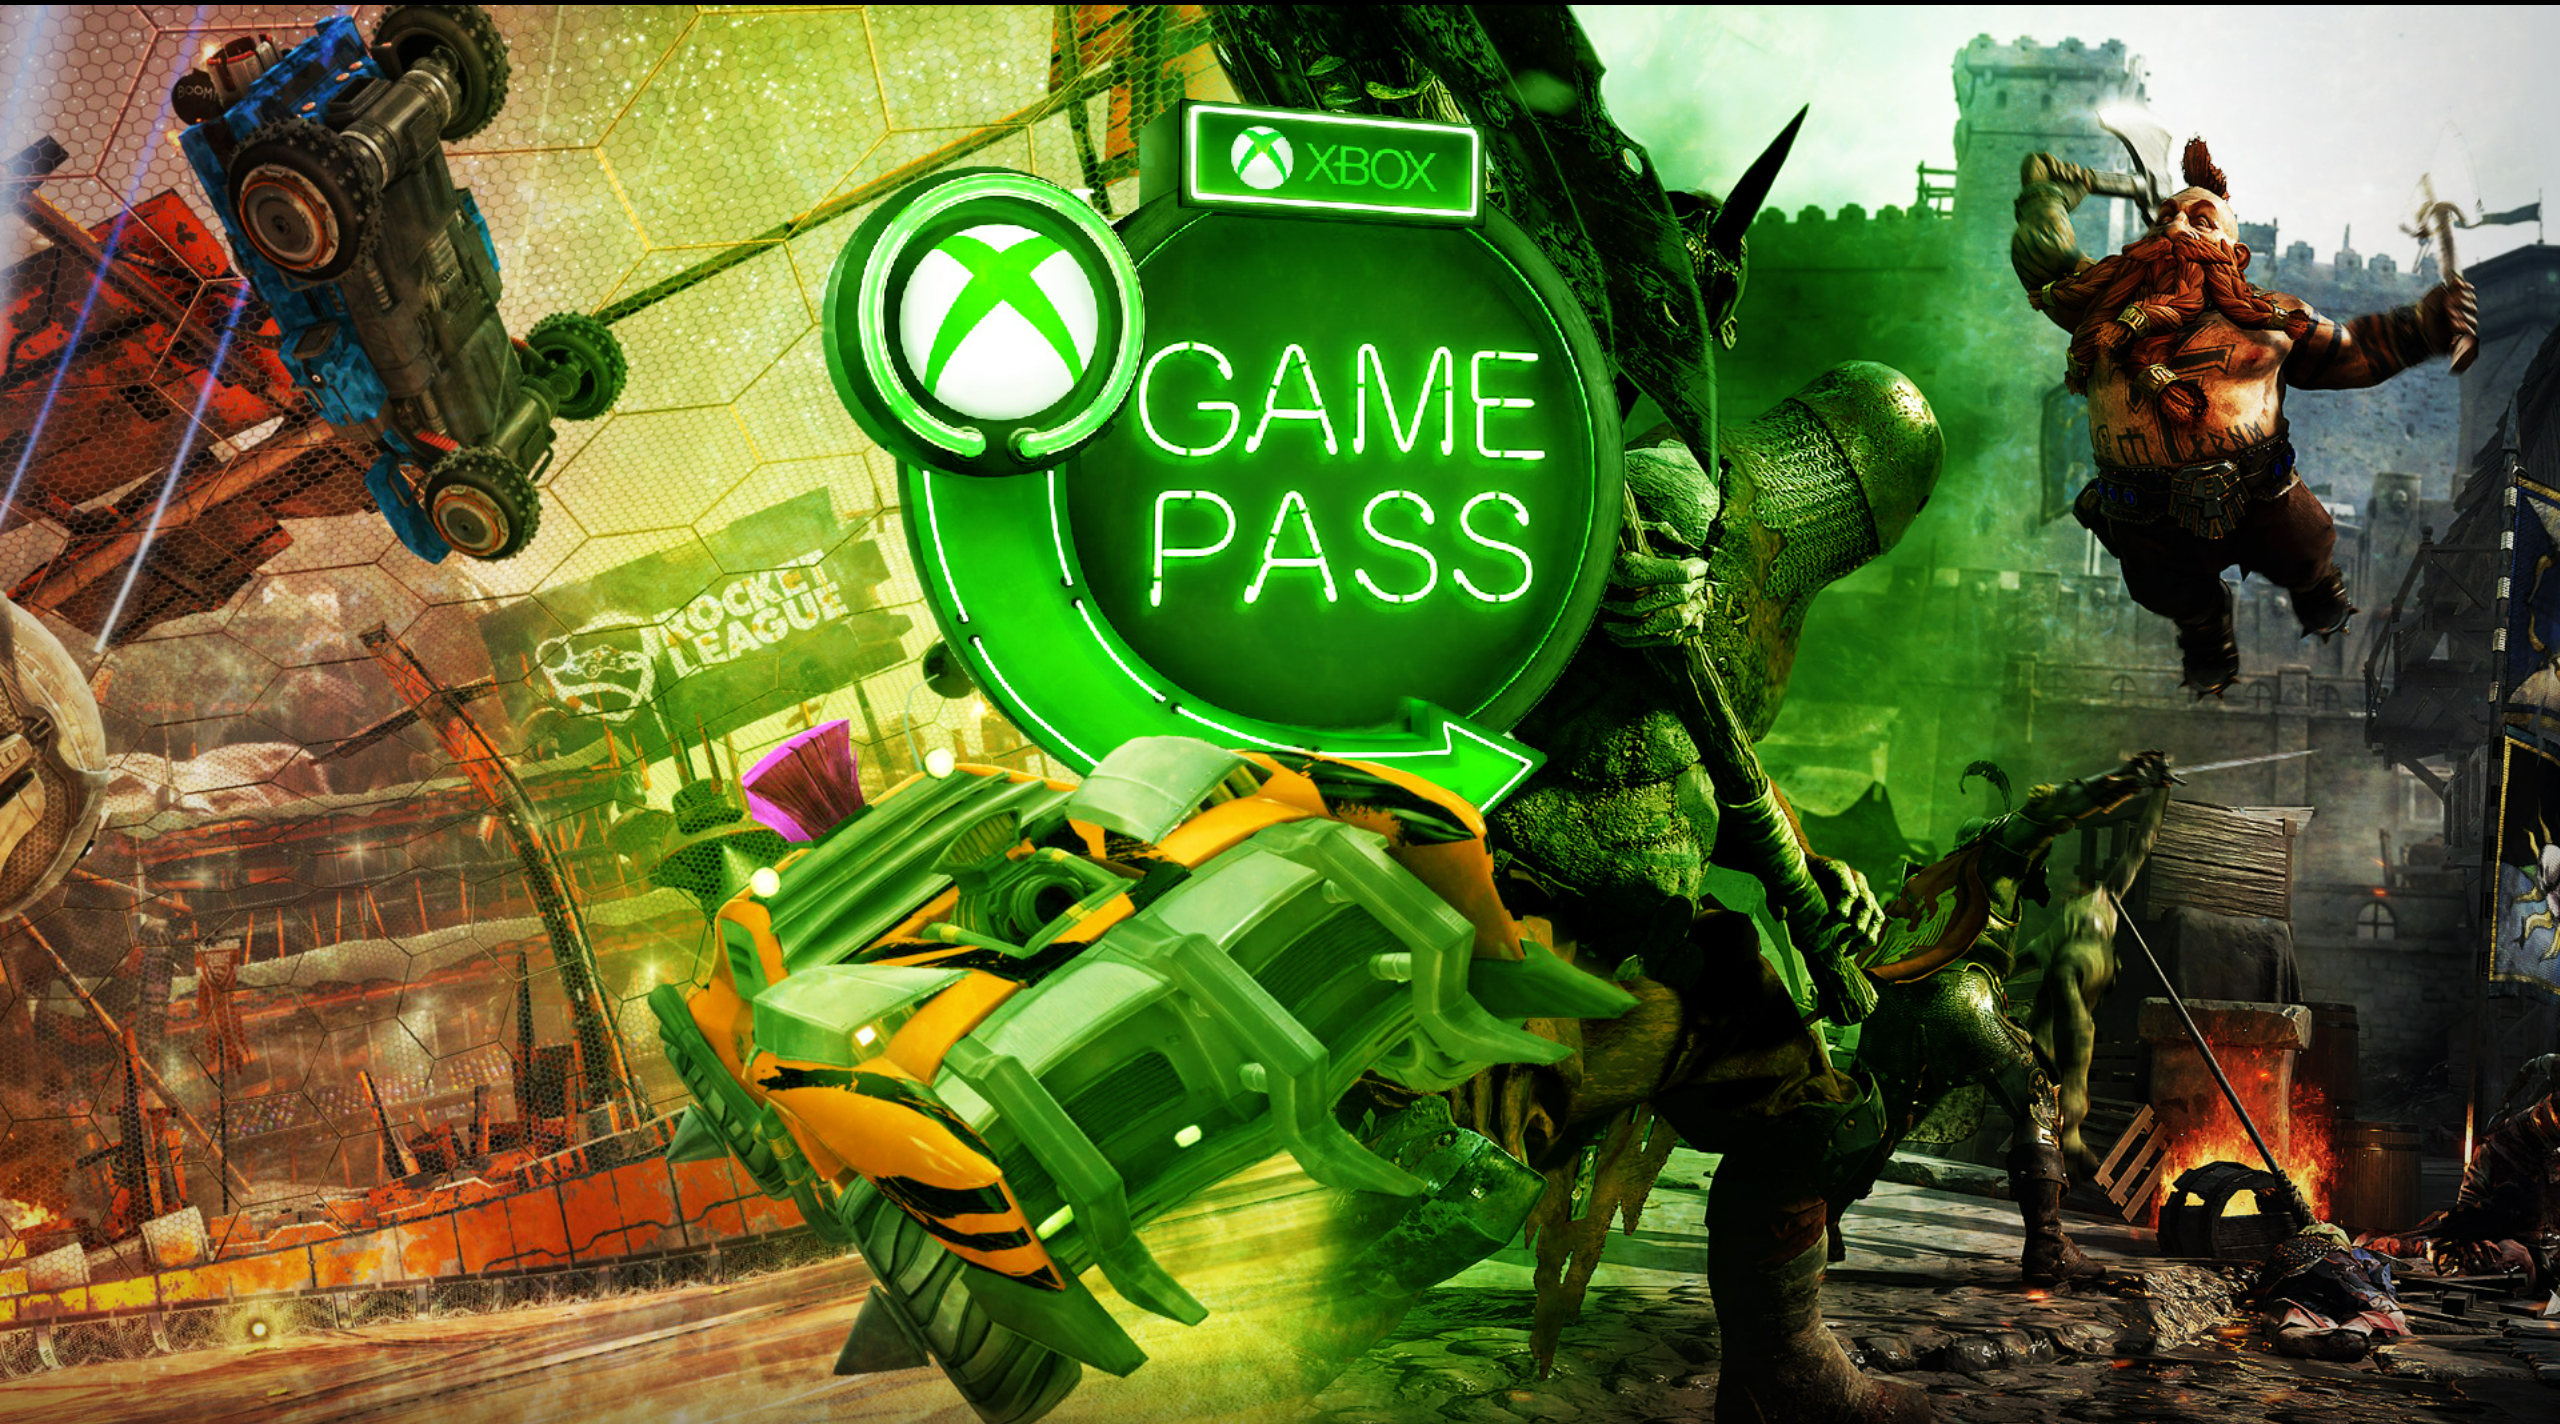 X games pass. Xbox Ultimate Pass игры. Xbox game Pass Ultimate. Подписка Xbox Ultimate. Подписка ультимейт для Xbox.